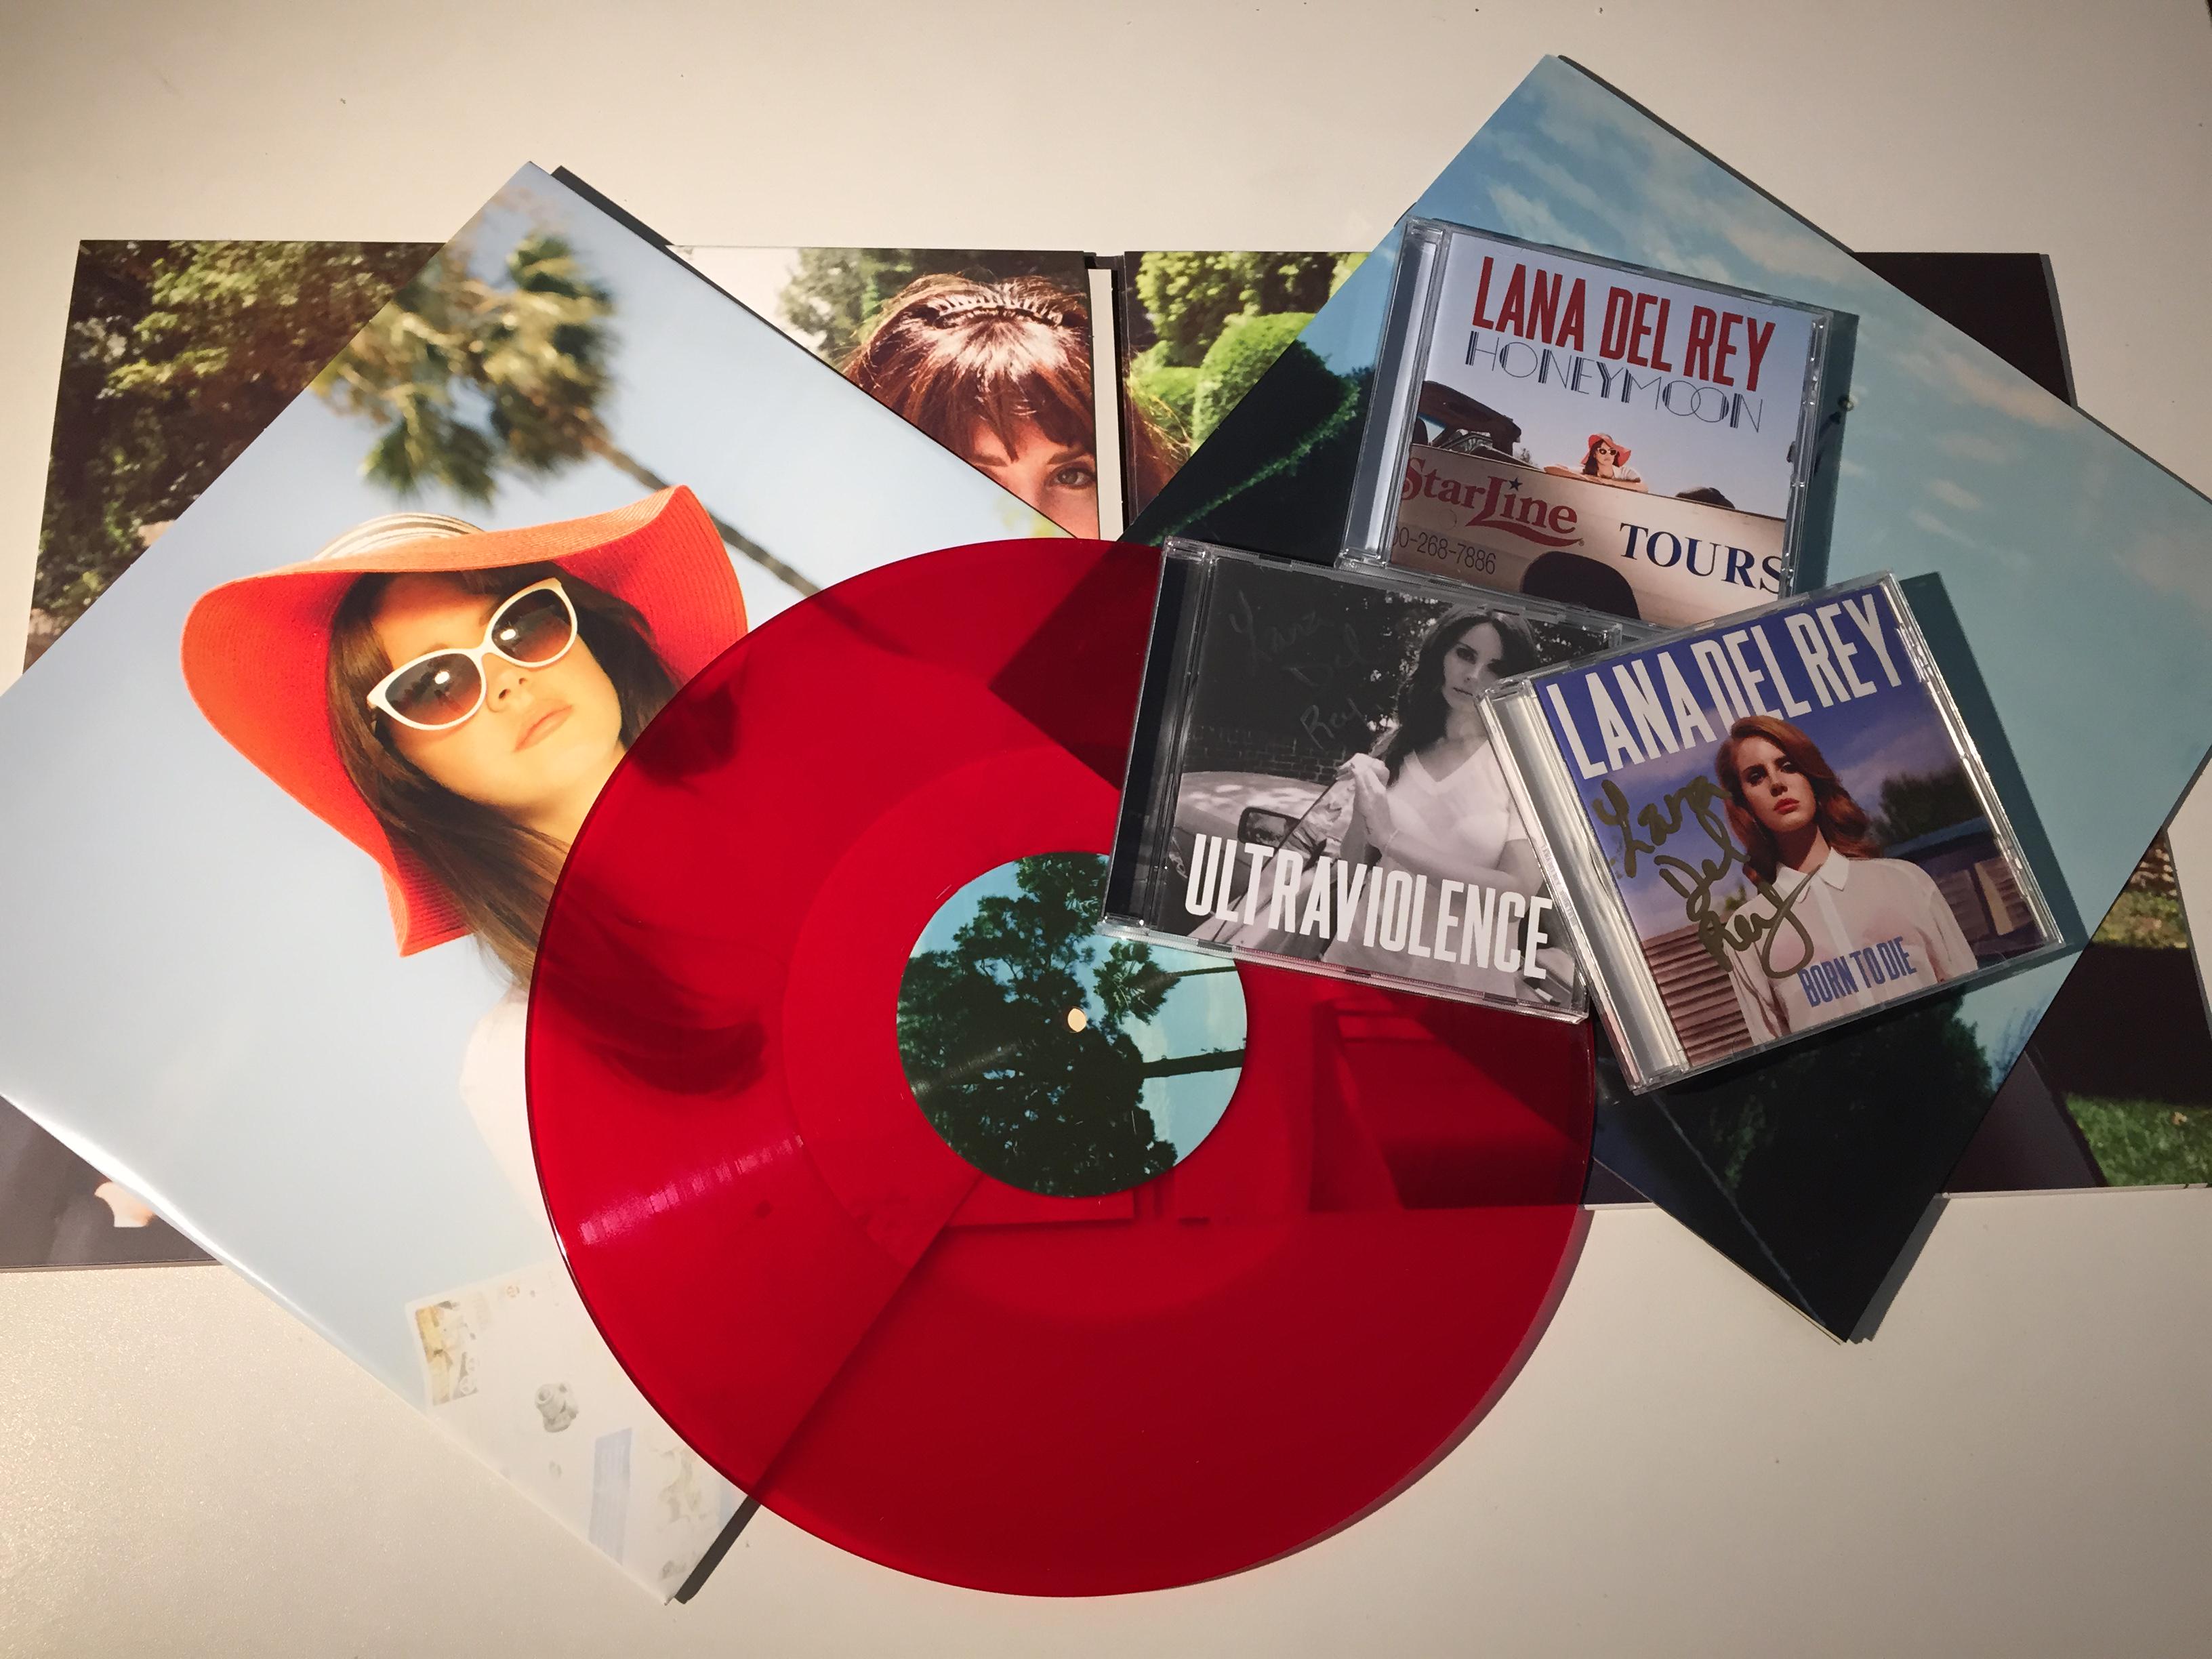 Universal Music Irl on X: To celebrate @LanaDelRey 's #1 album